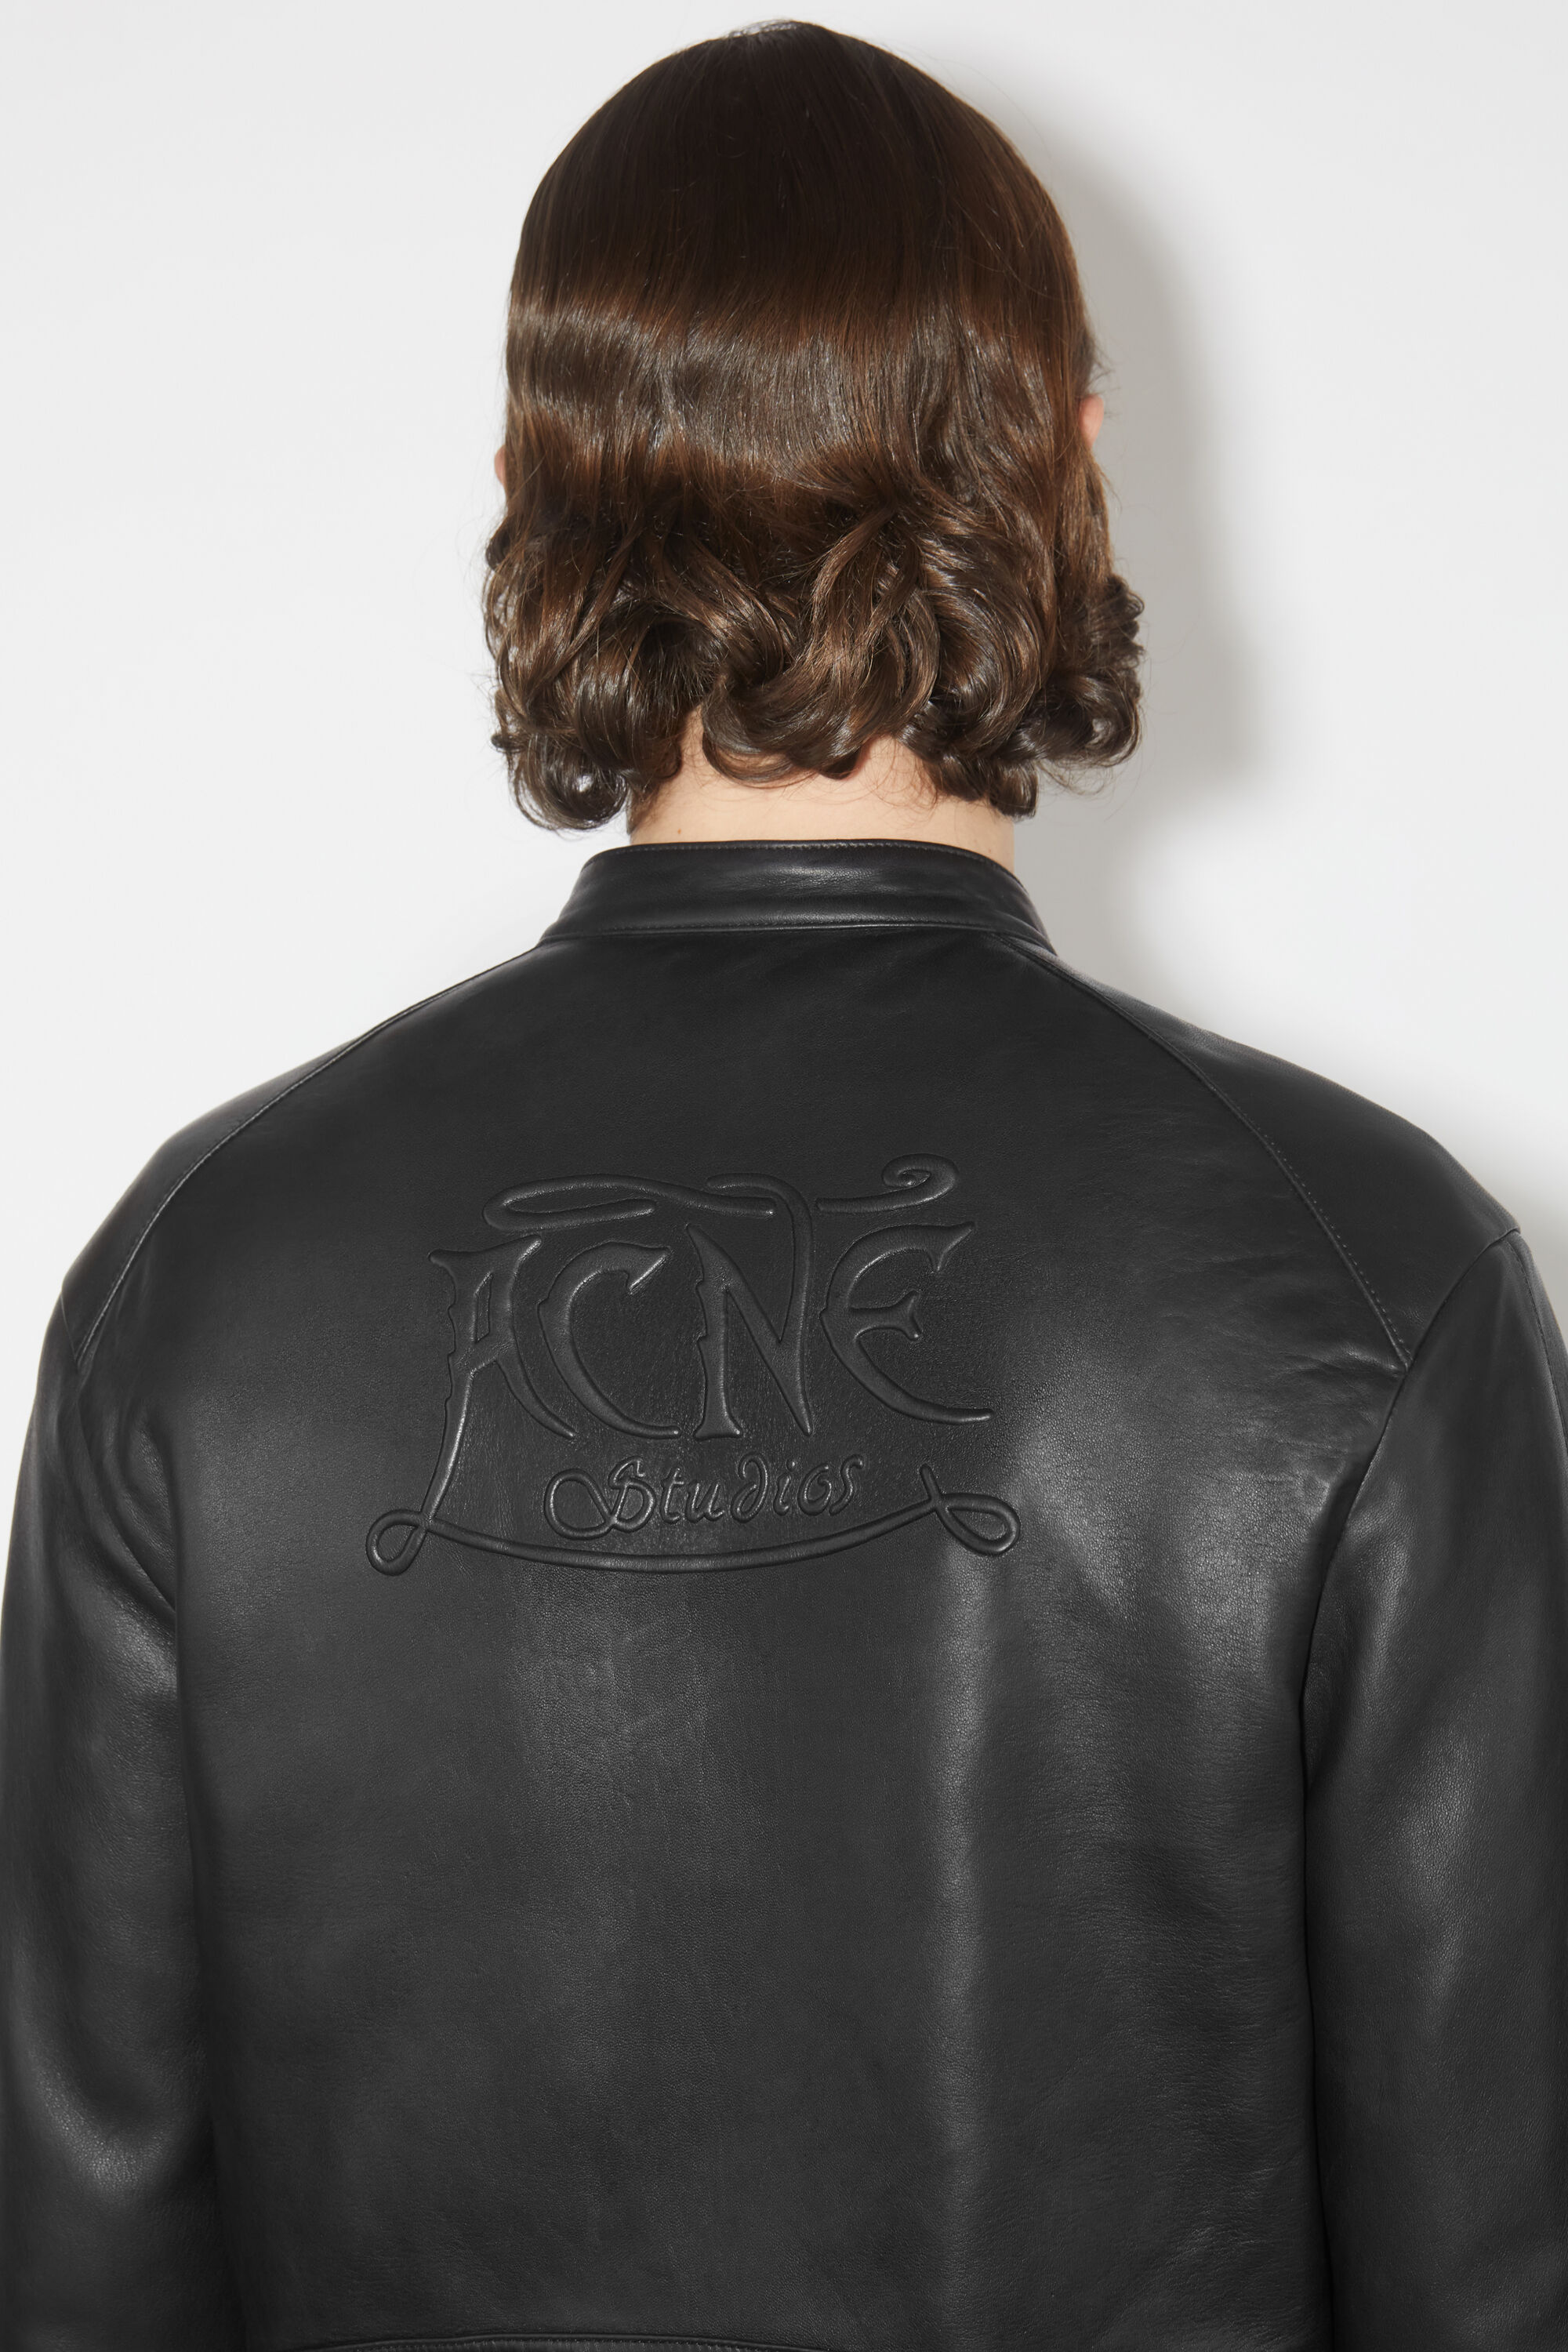 Acne Studios - Leather jacket - Black